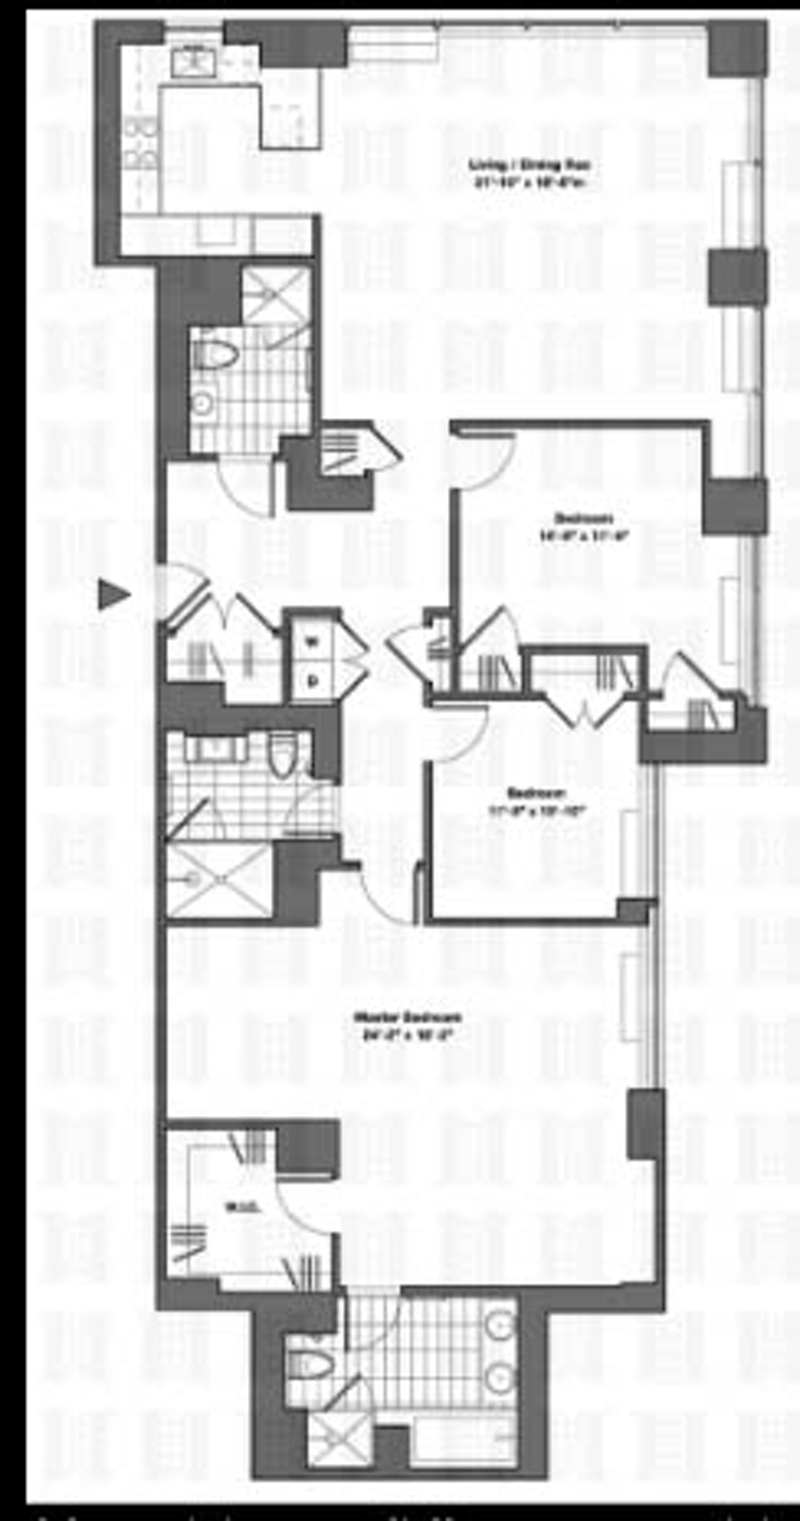 Floorplan for 322 West 57th Street, PH57K